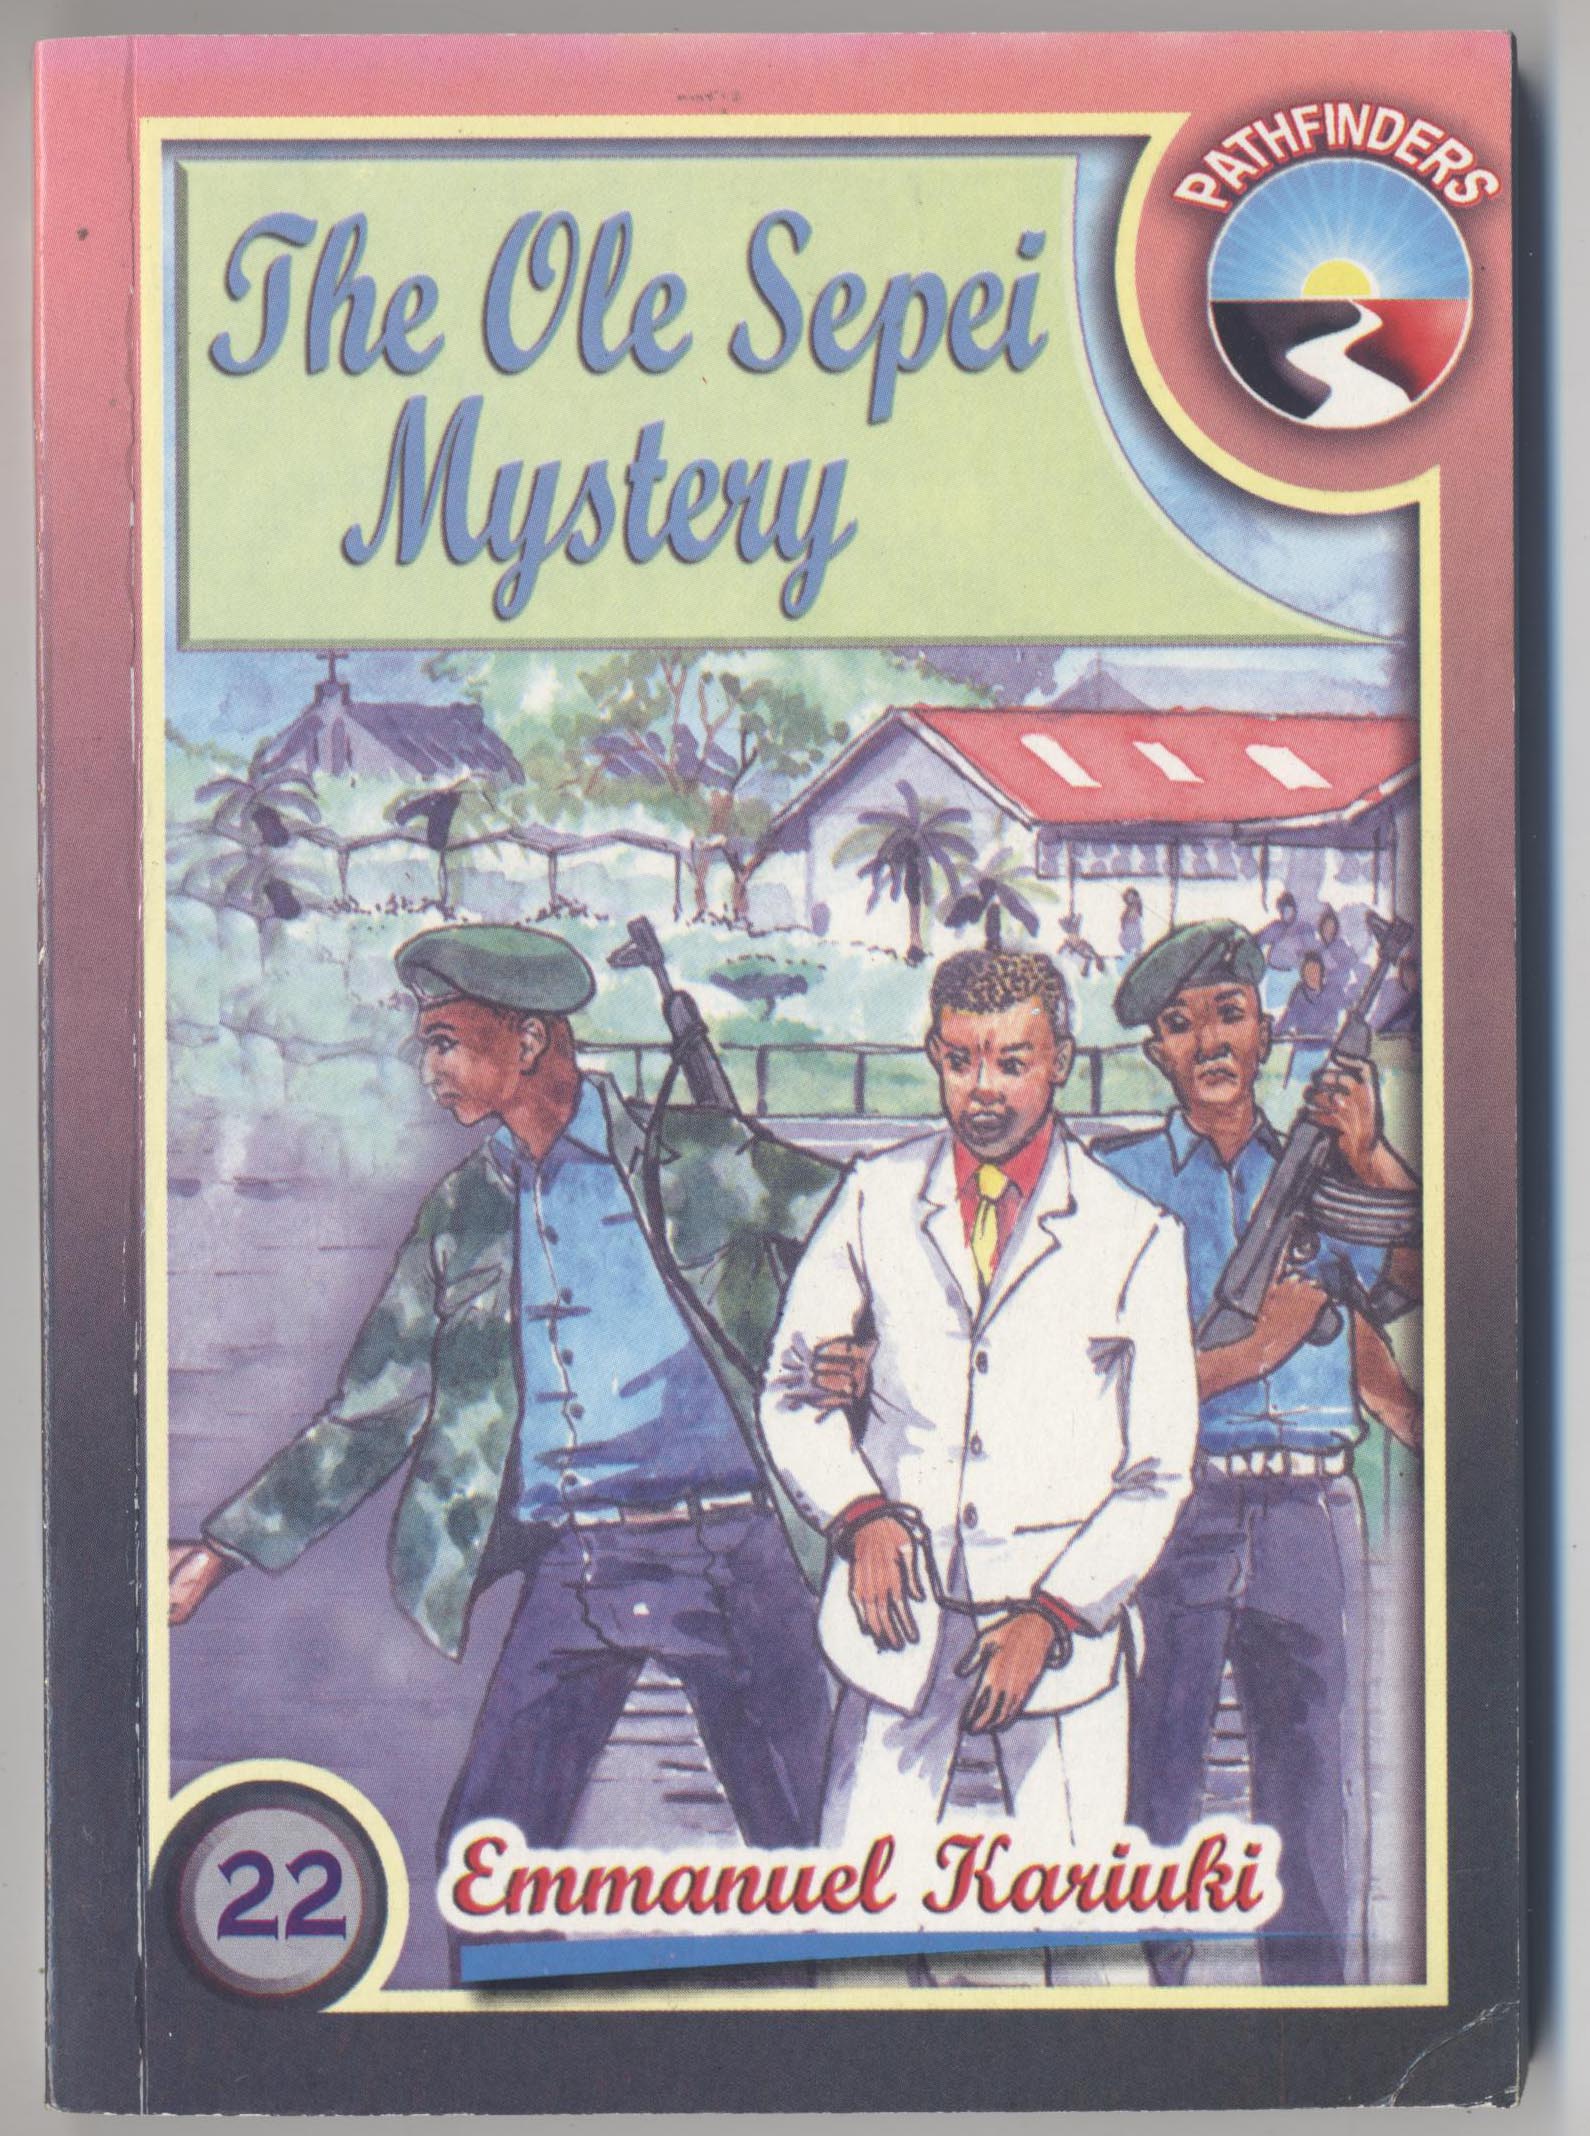 the ole sepei mystery